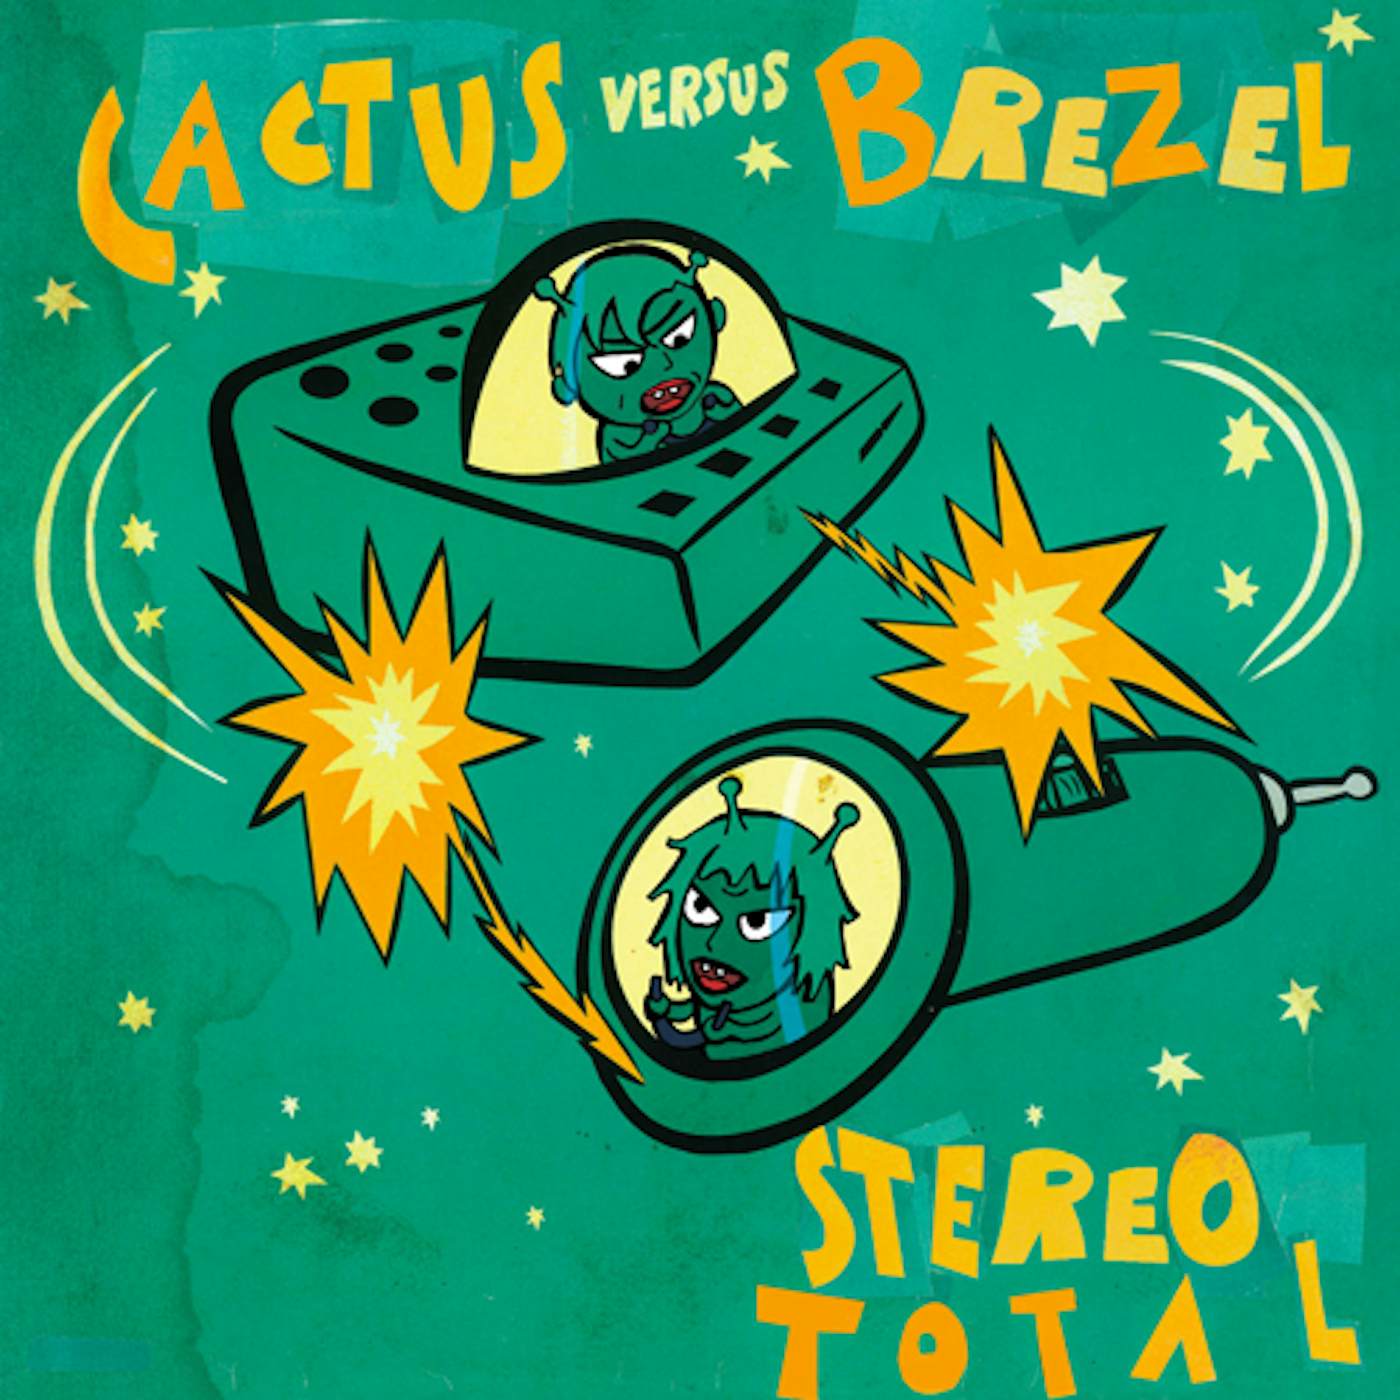 Stereo Total Cactus Versus Brezel Vinyl Record